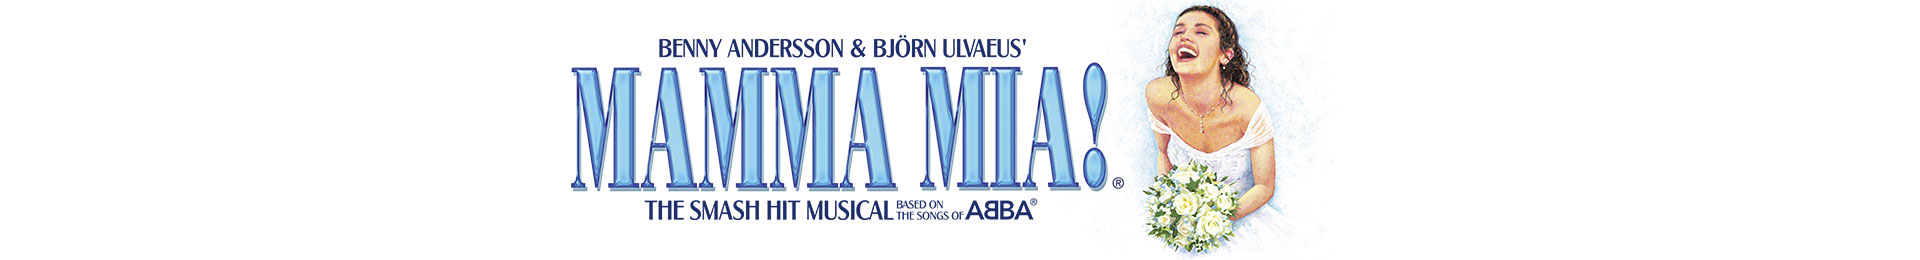 Mamma Mia! & Dinner at Jamie's Italian  banner image